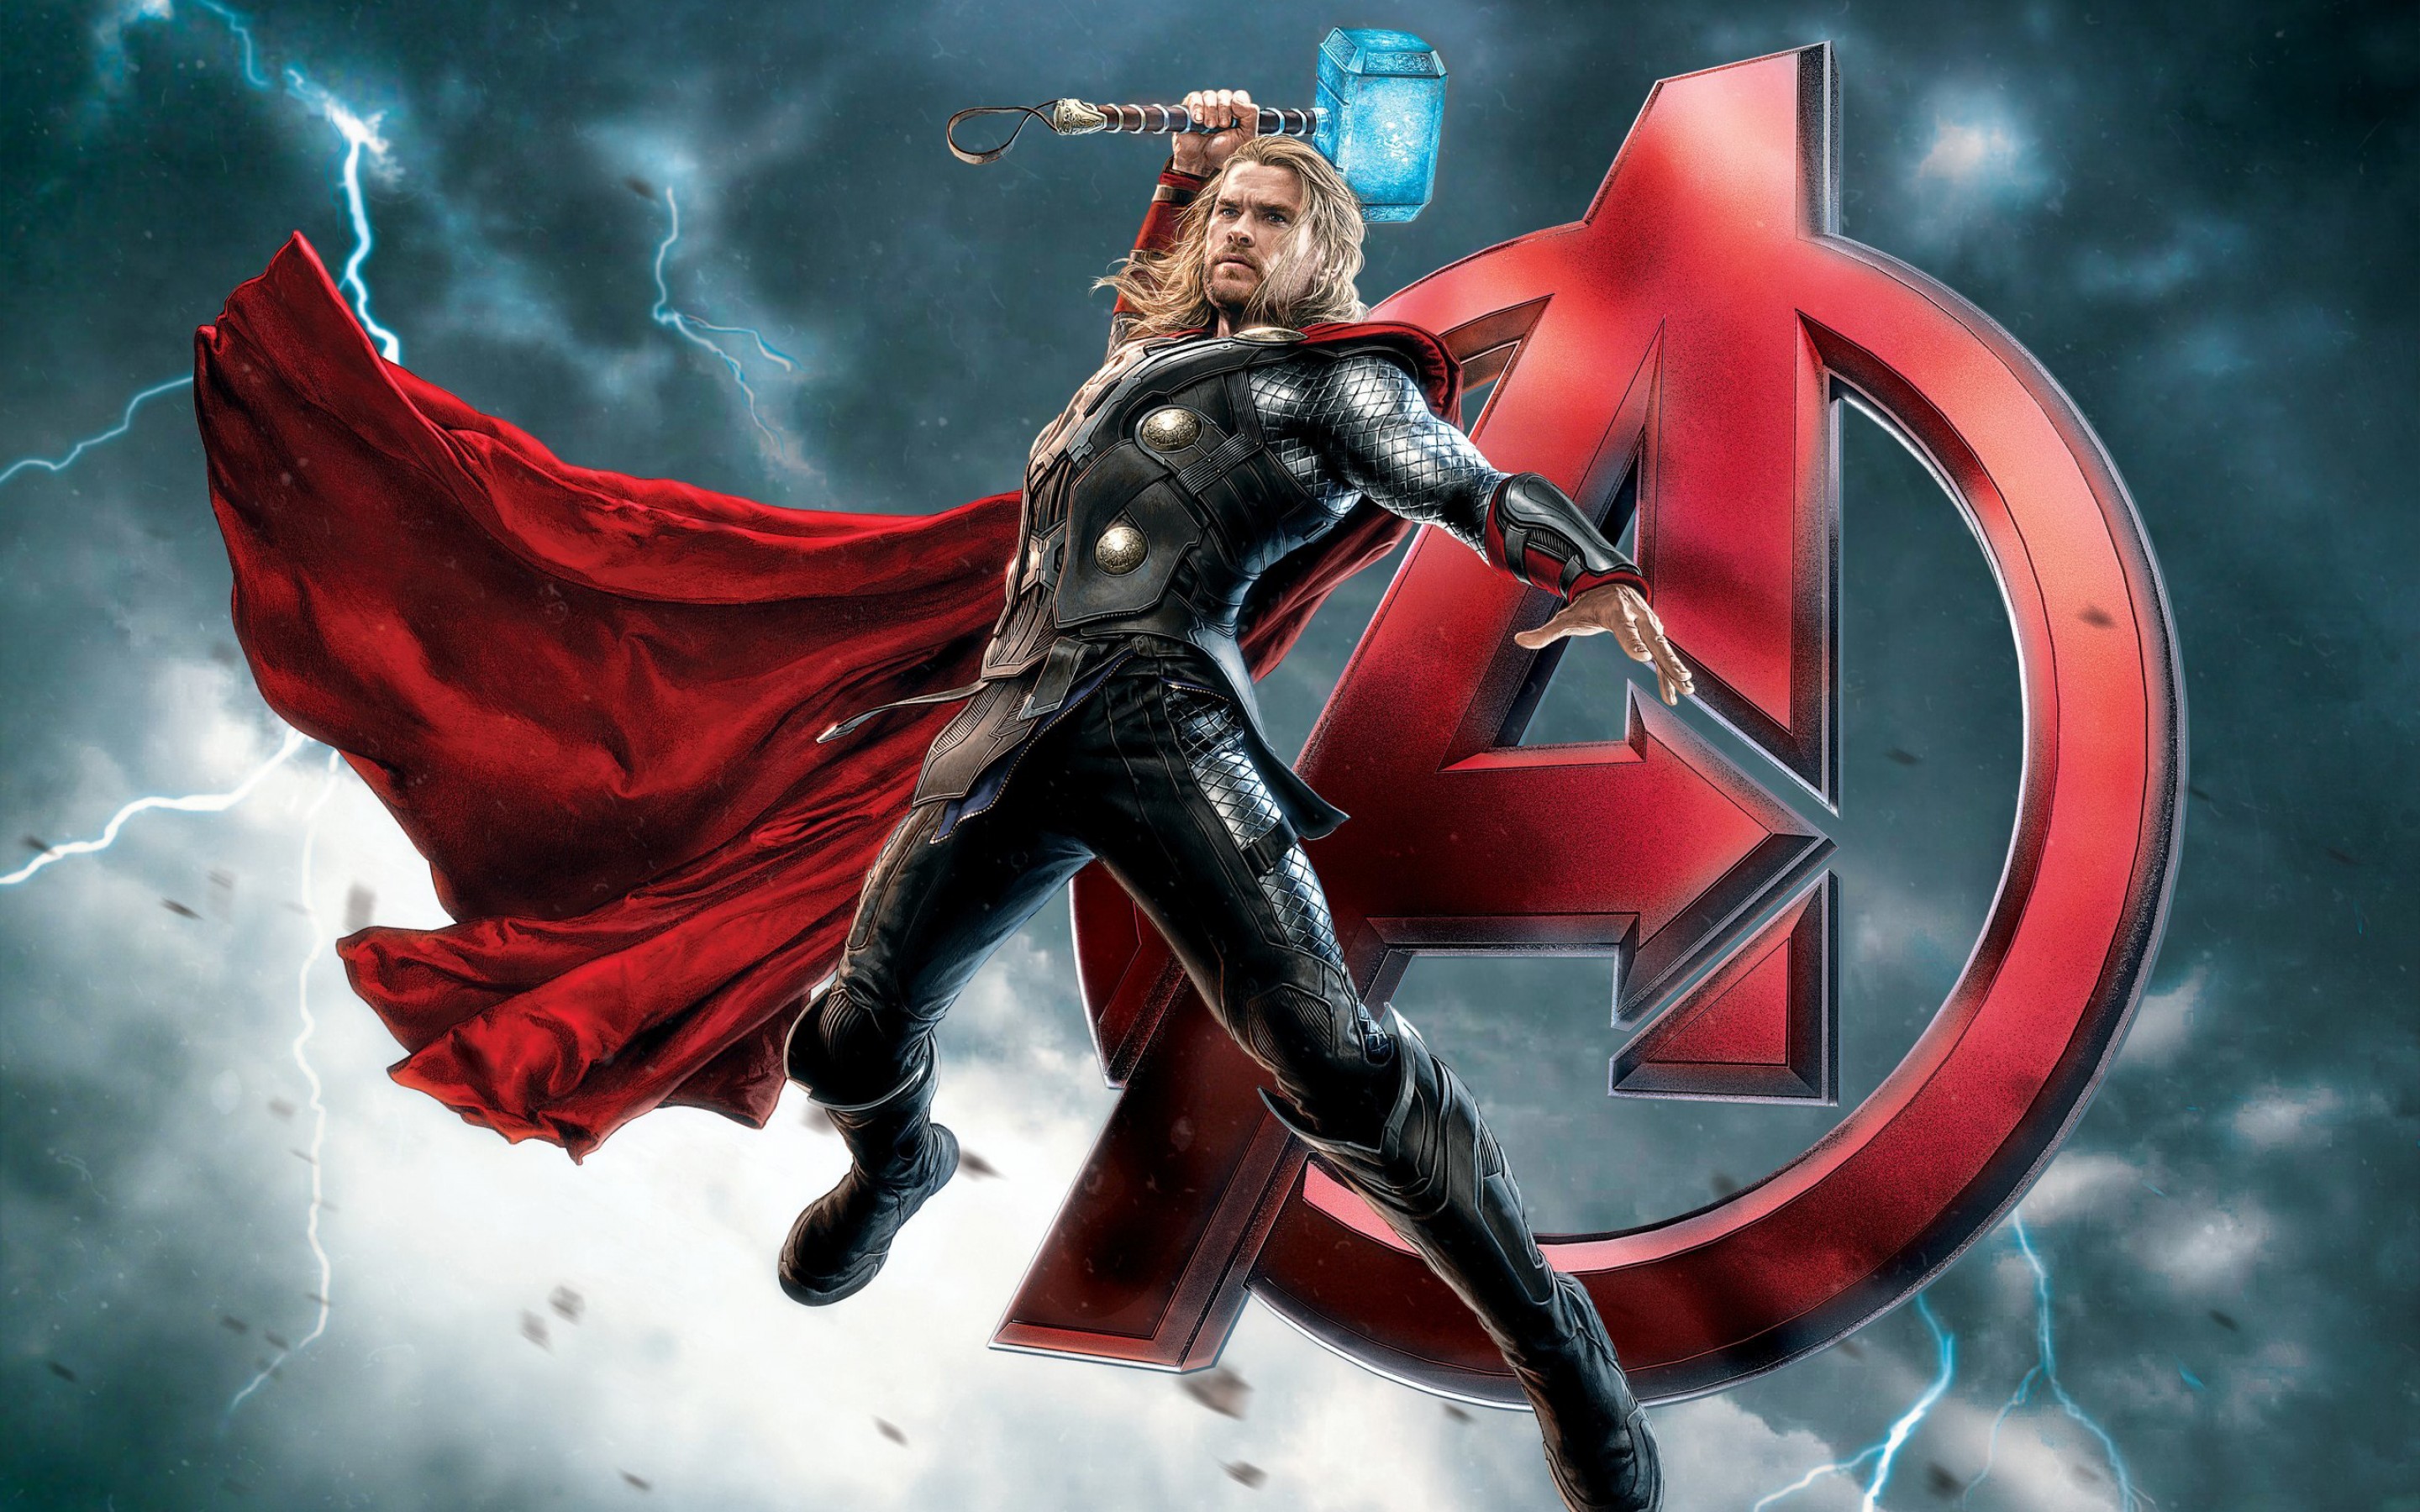 The Avengers Fantasy Warrior Thor Super Hero Poster Ultra HD 4k Wallpaper 2880x1800, Wallpaper13.com